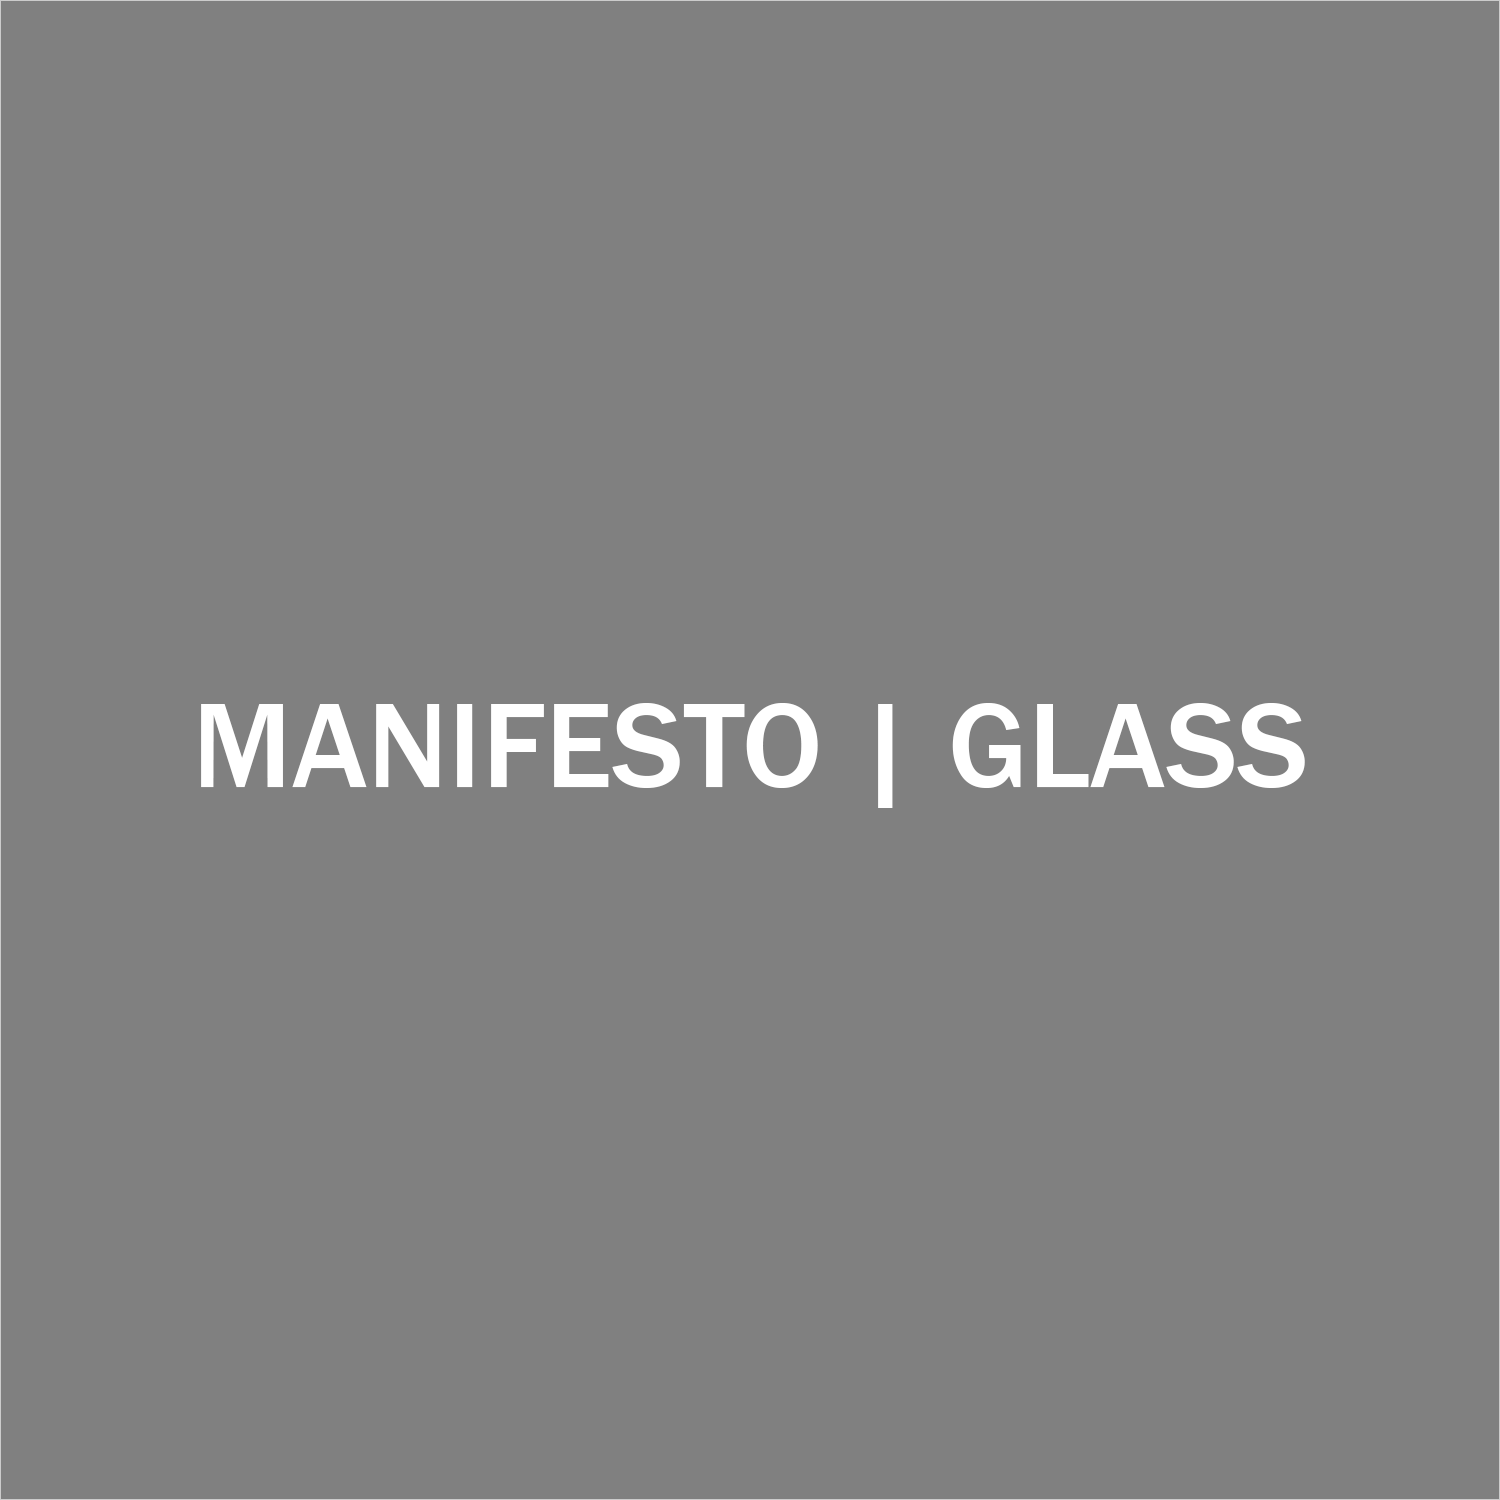 MANIFESTO | GLASS